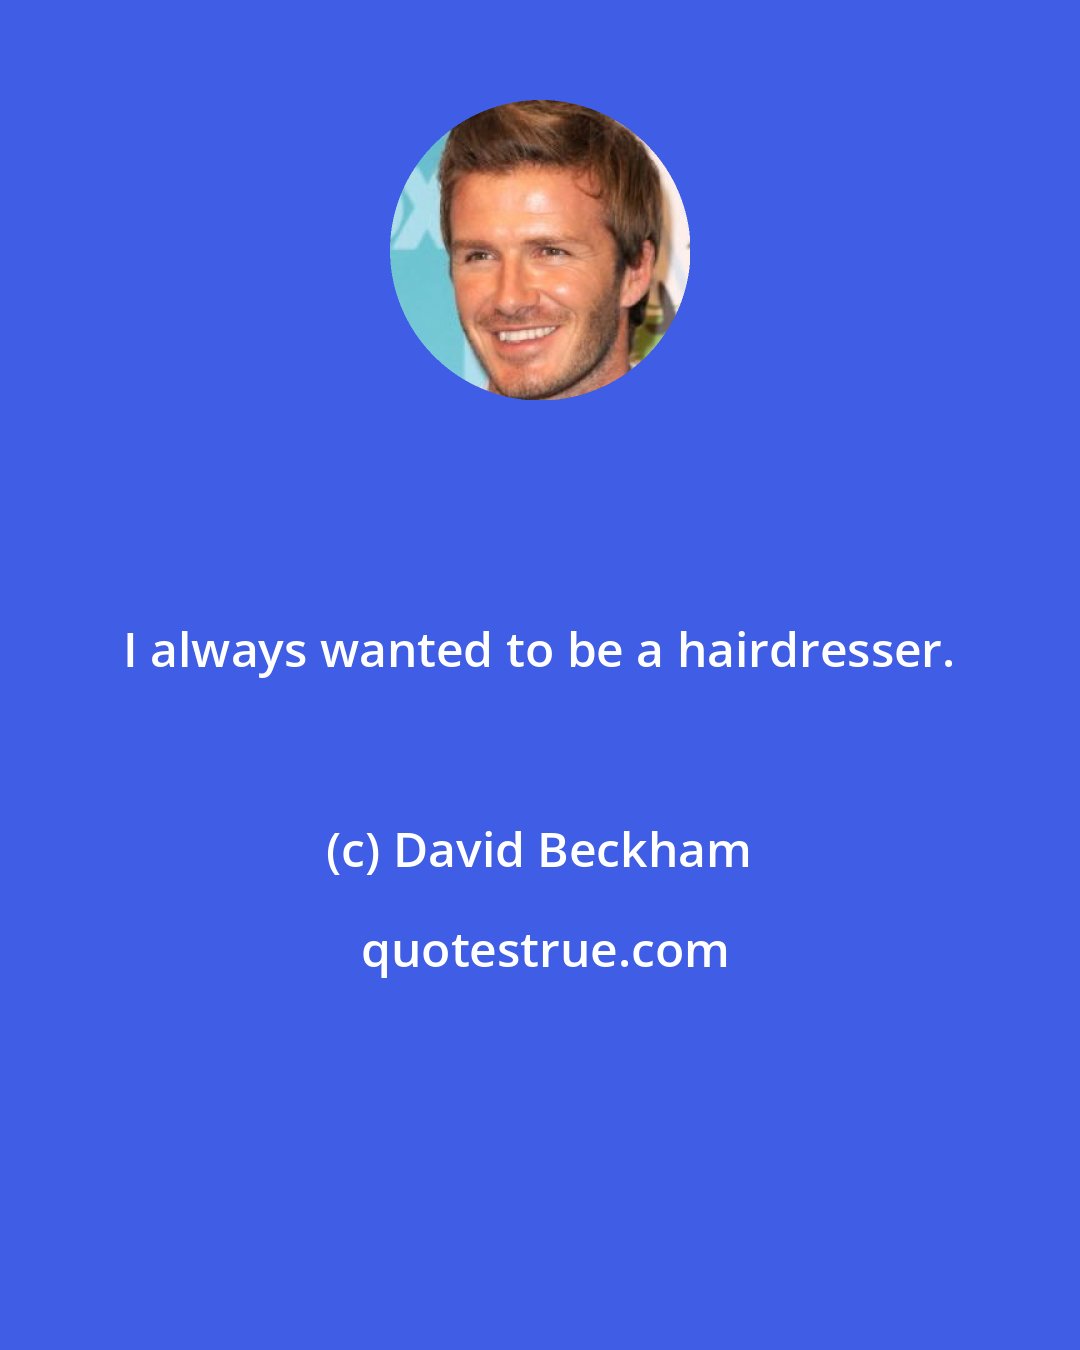 David Beckham: I always wanted to be a hairdresser.